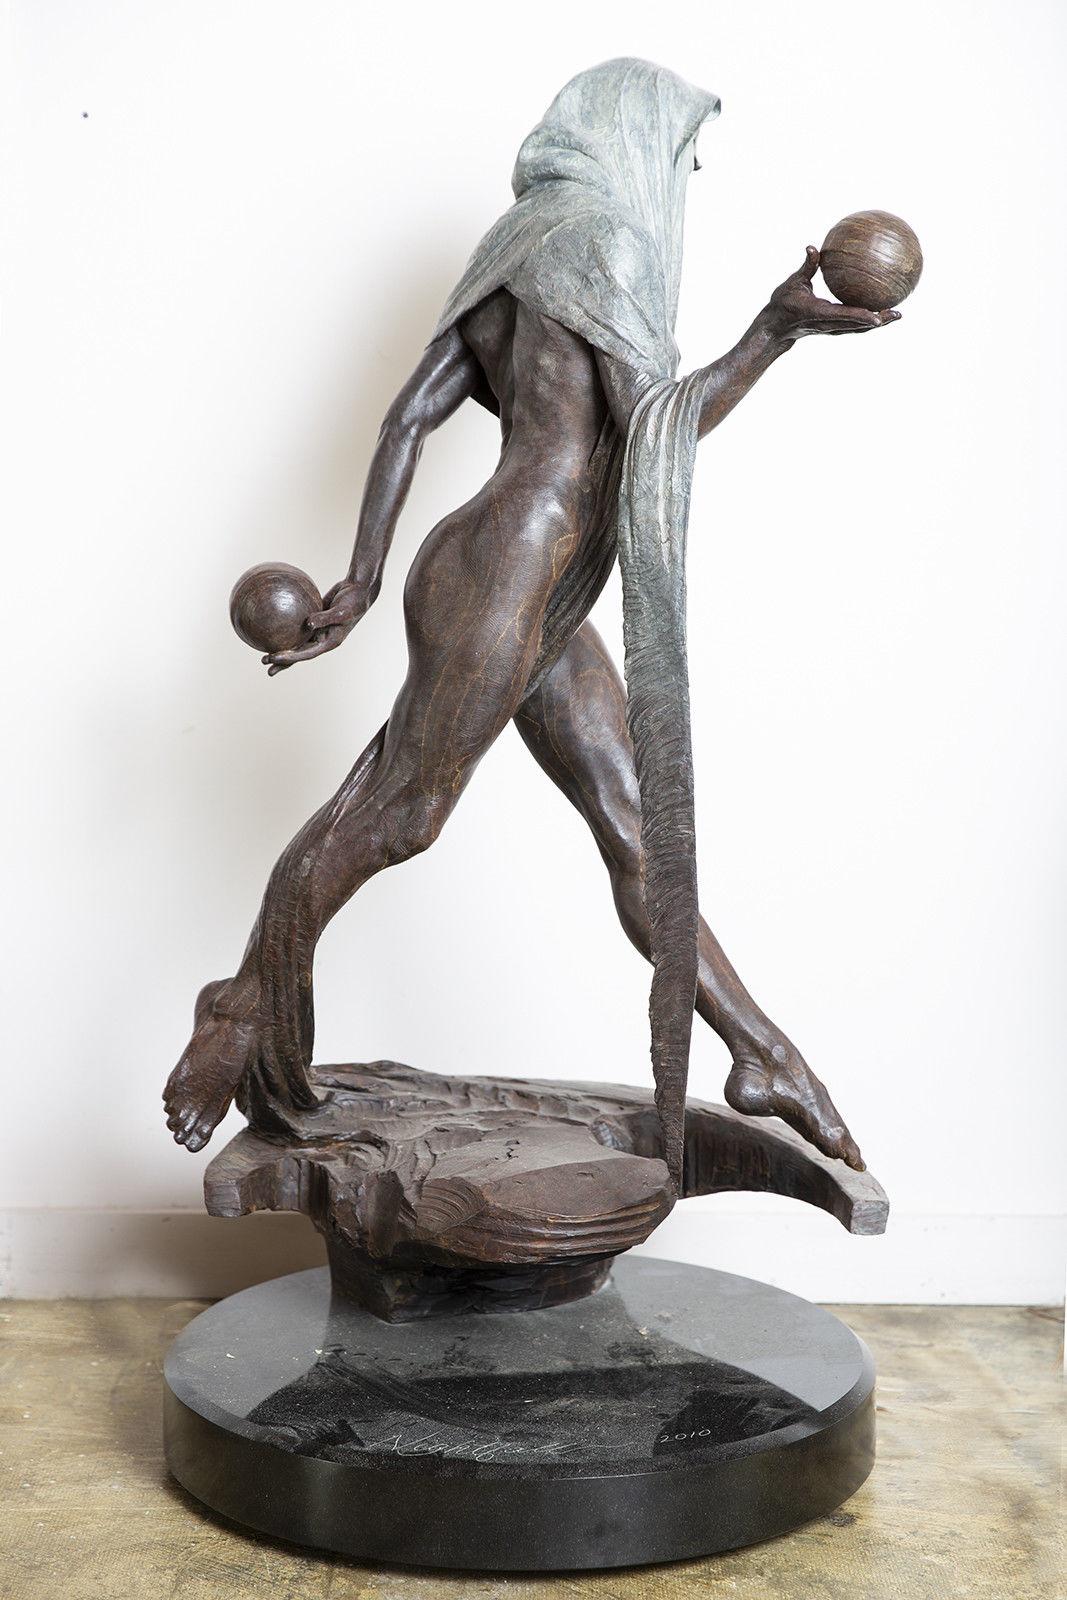 Artist: Richard MacDonald
Title: Nightfall Platinum Series
Medium: Bronze Sculpture
Size: 48